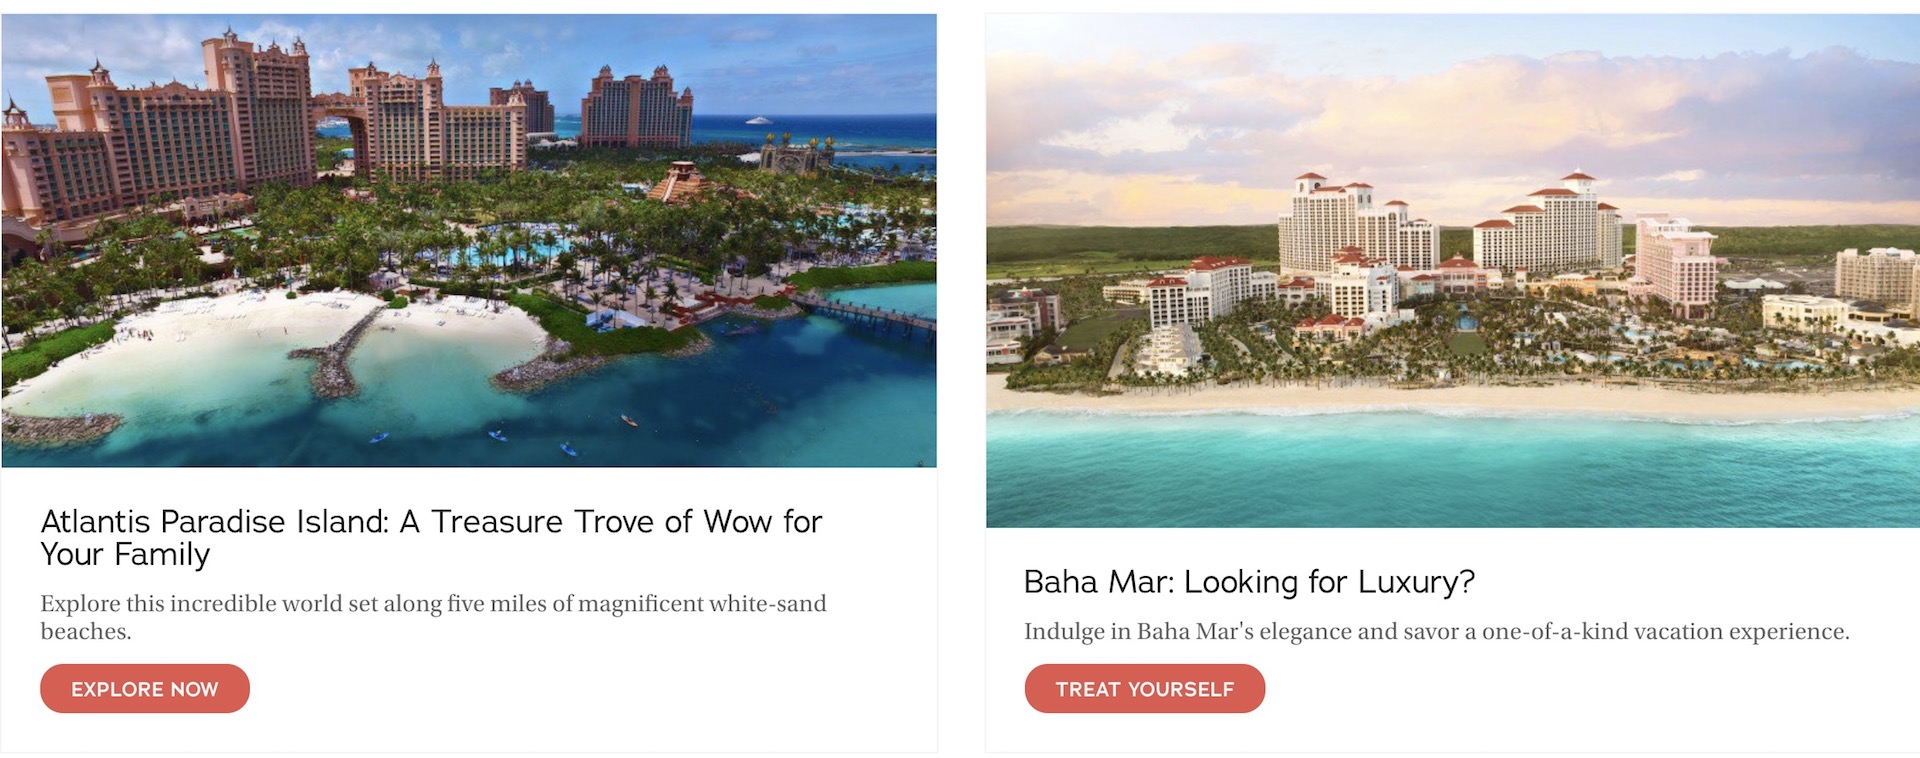 Nassau Paradise Island Website | VERB Interactive